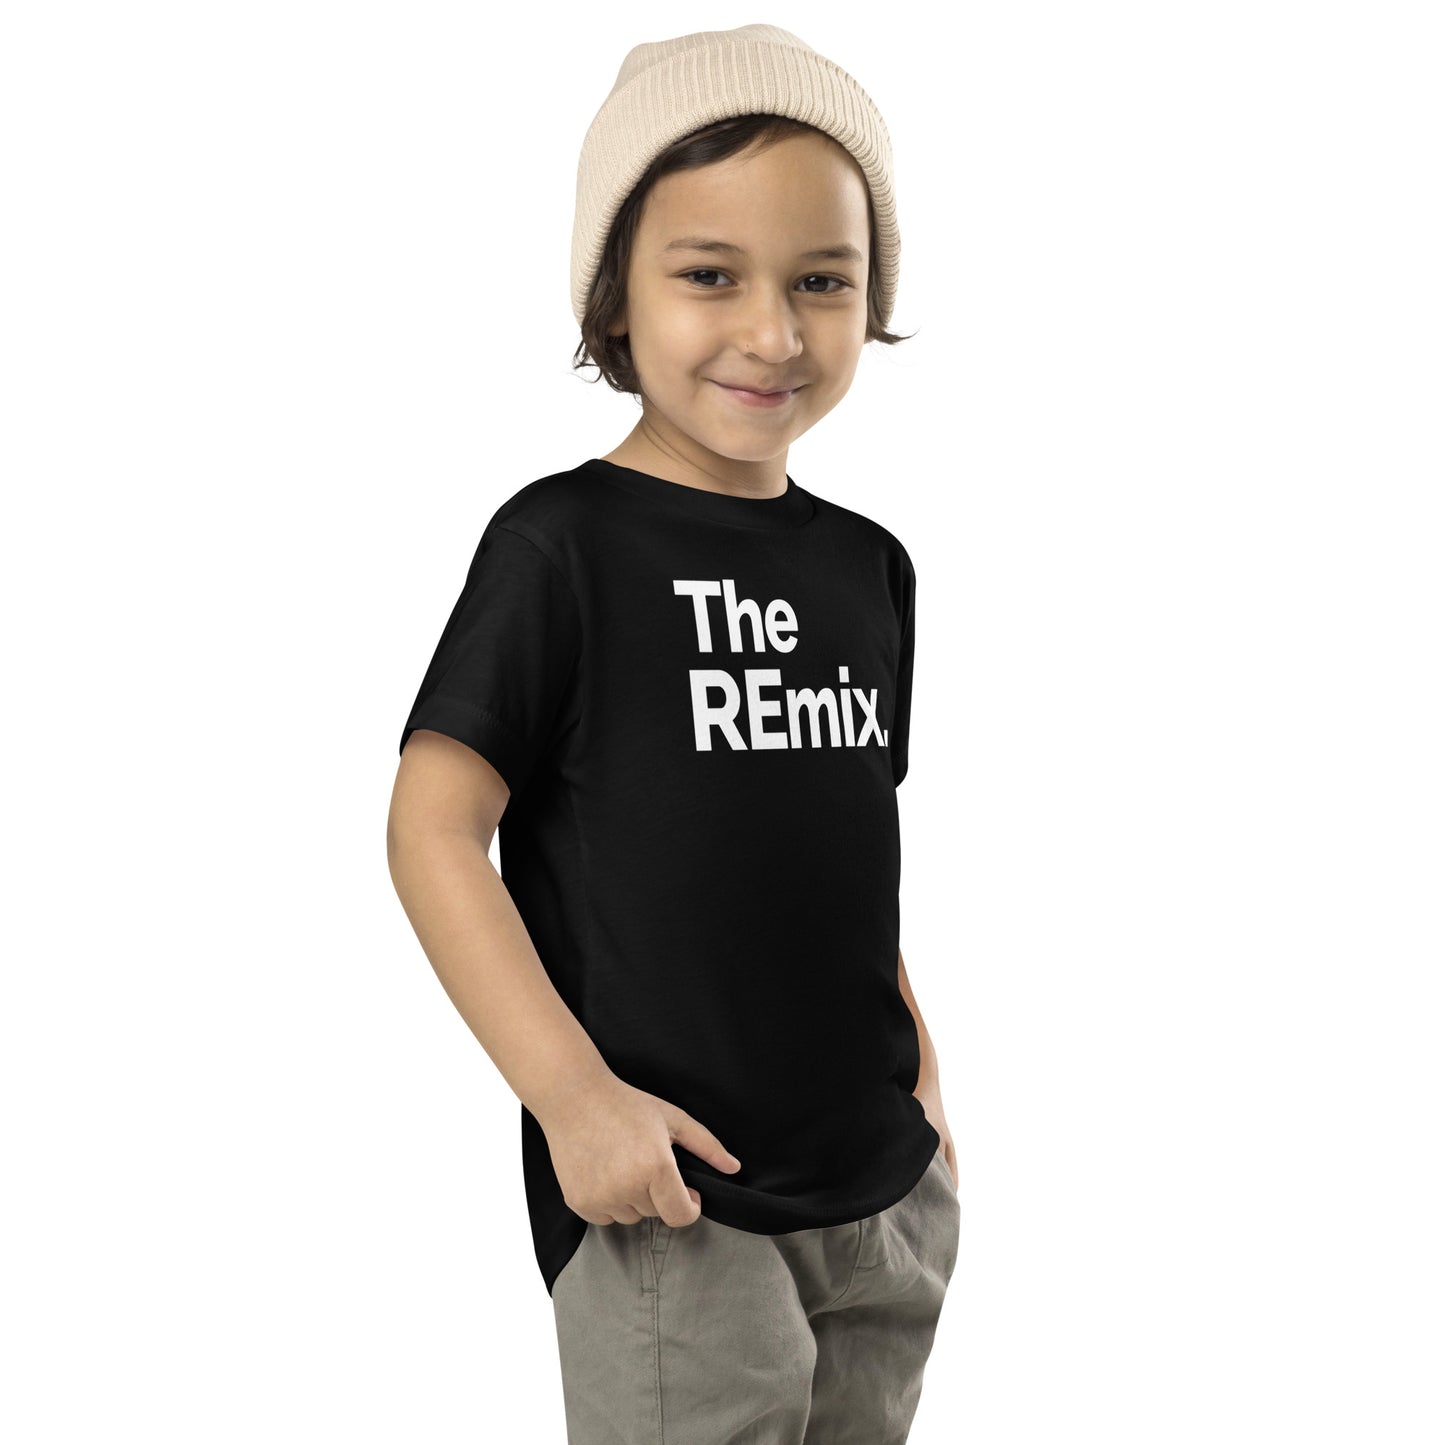 Camiseta de Niño The Remix. Color Negro.